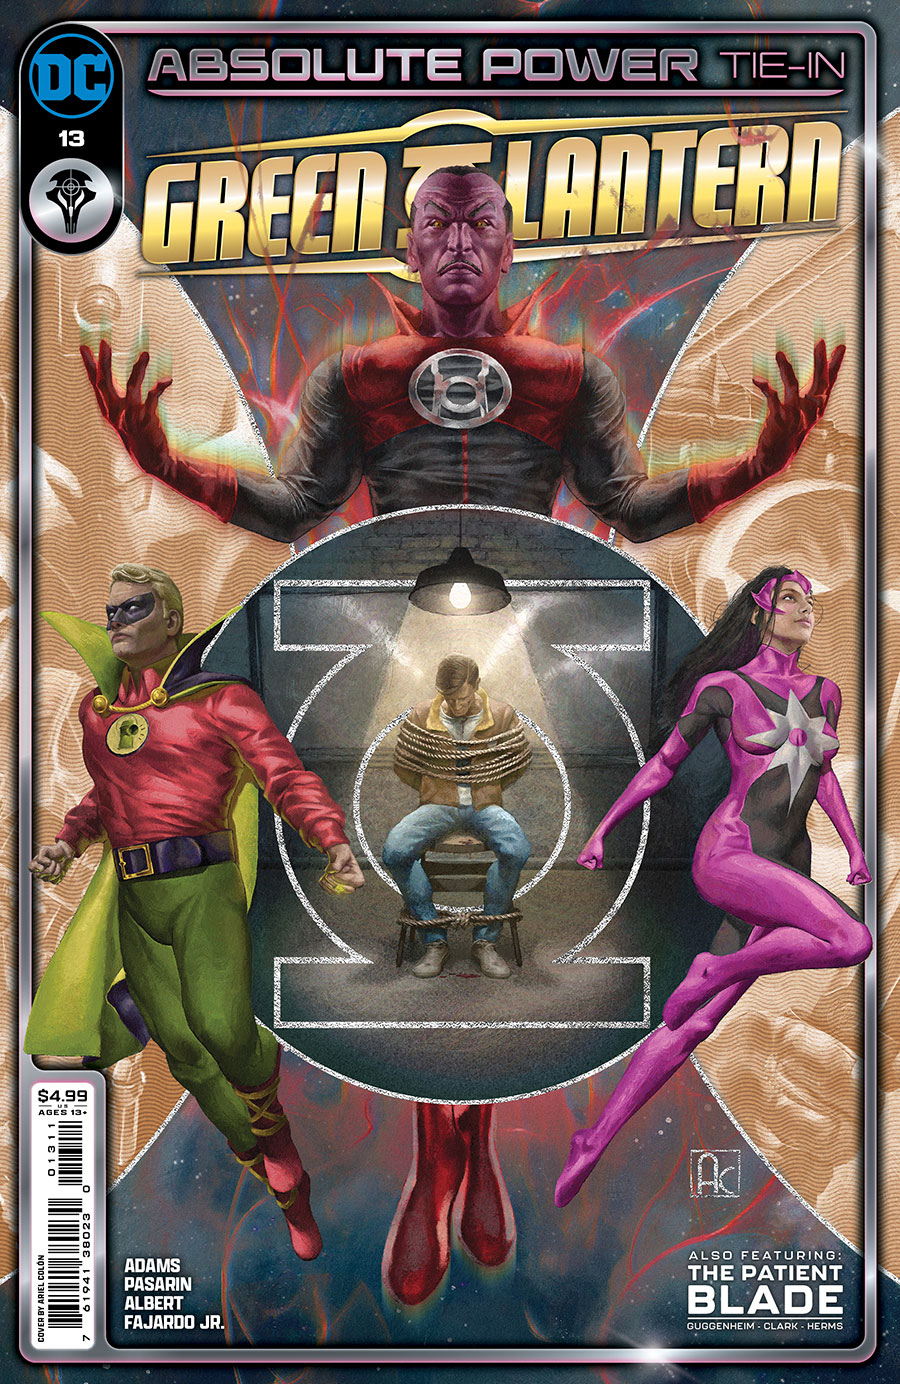 Green Lantern Vol 8 #13 Cover A Regular Ariel Colon Cover (Absolute Power Tie-In)